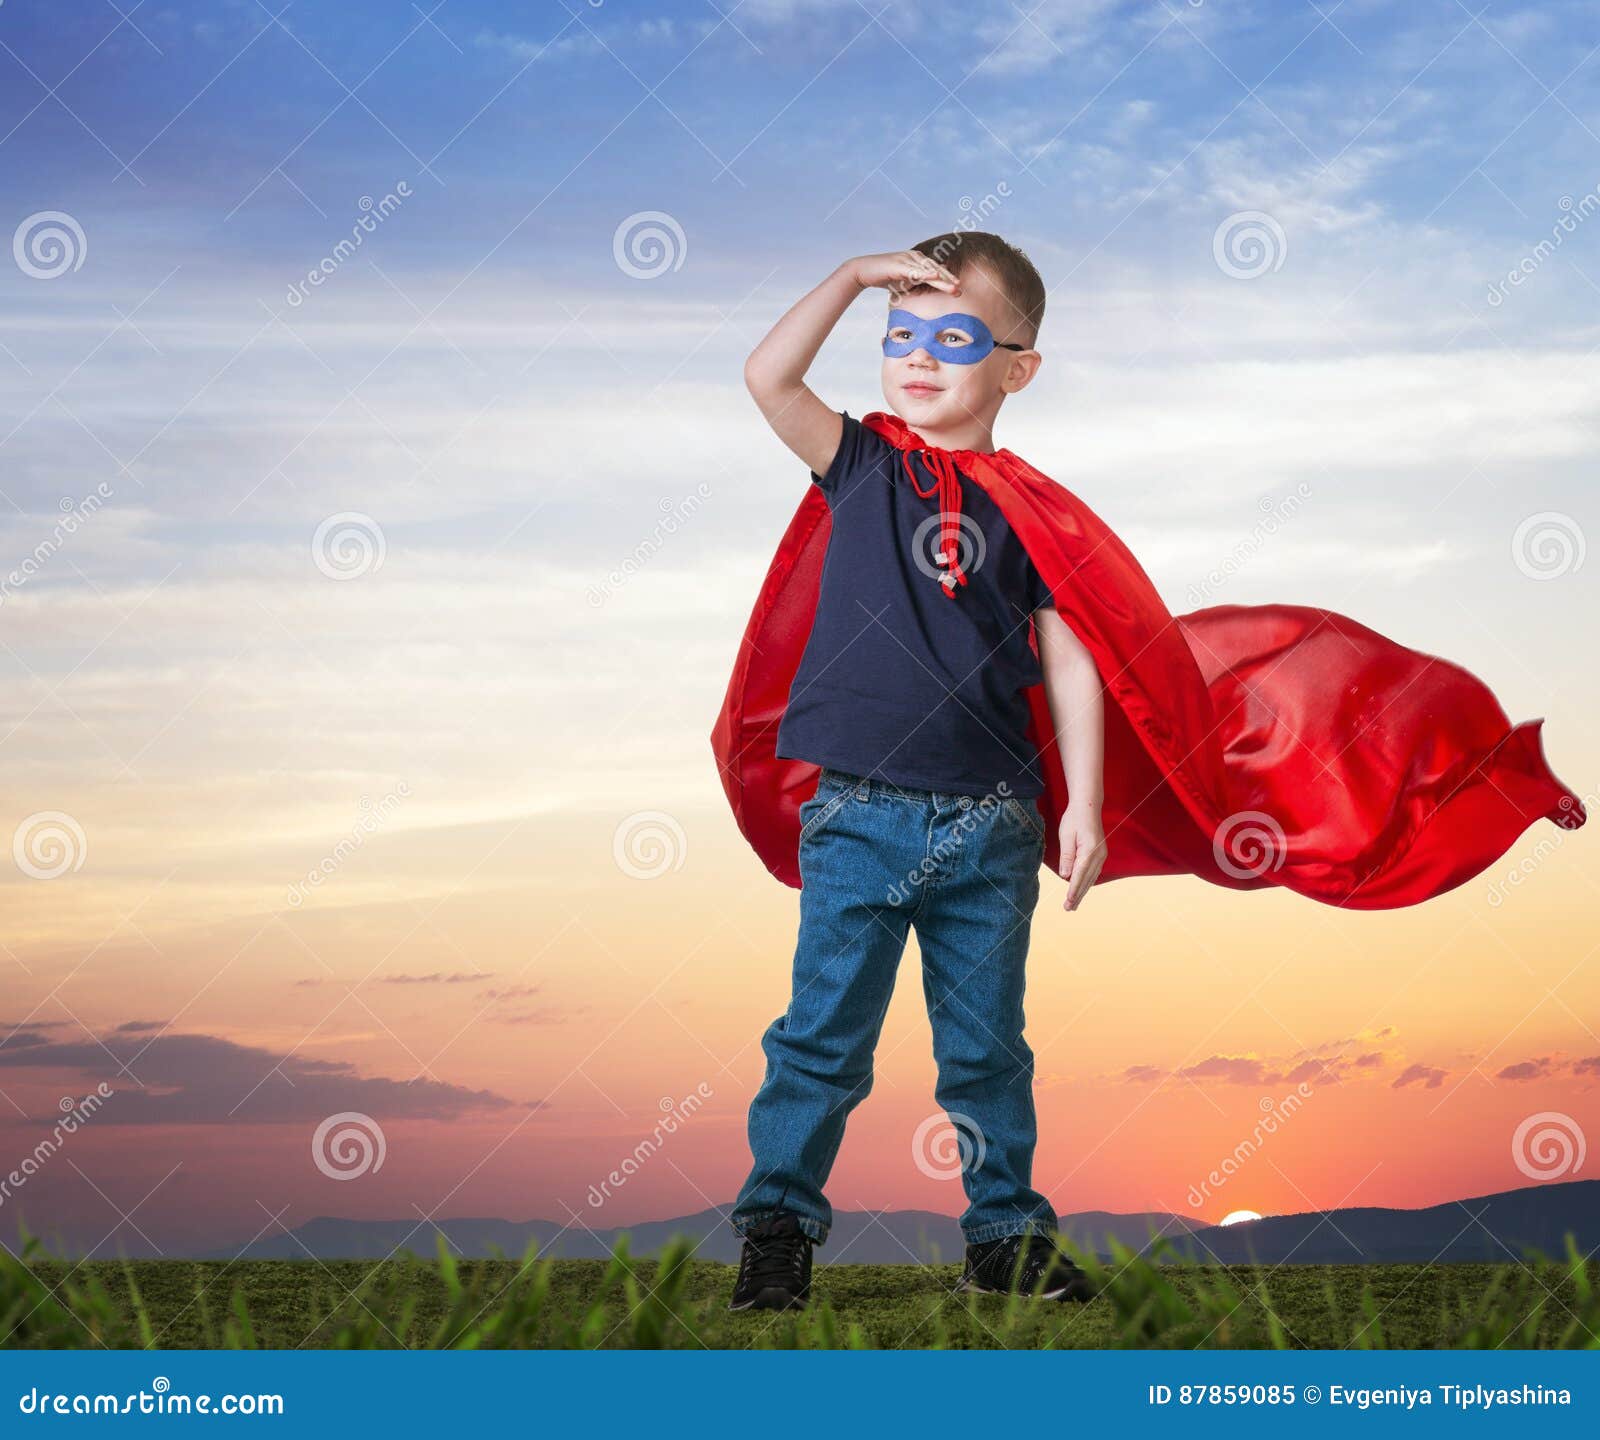 a boy in a superman costume stands